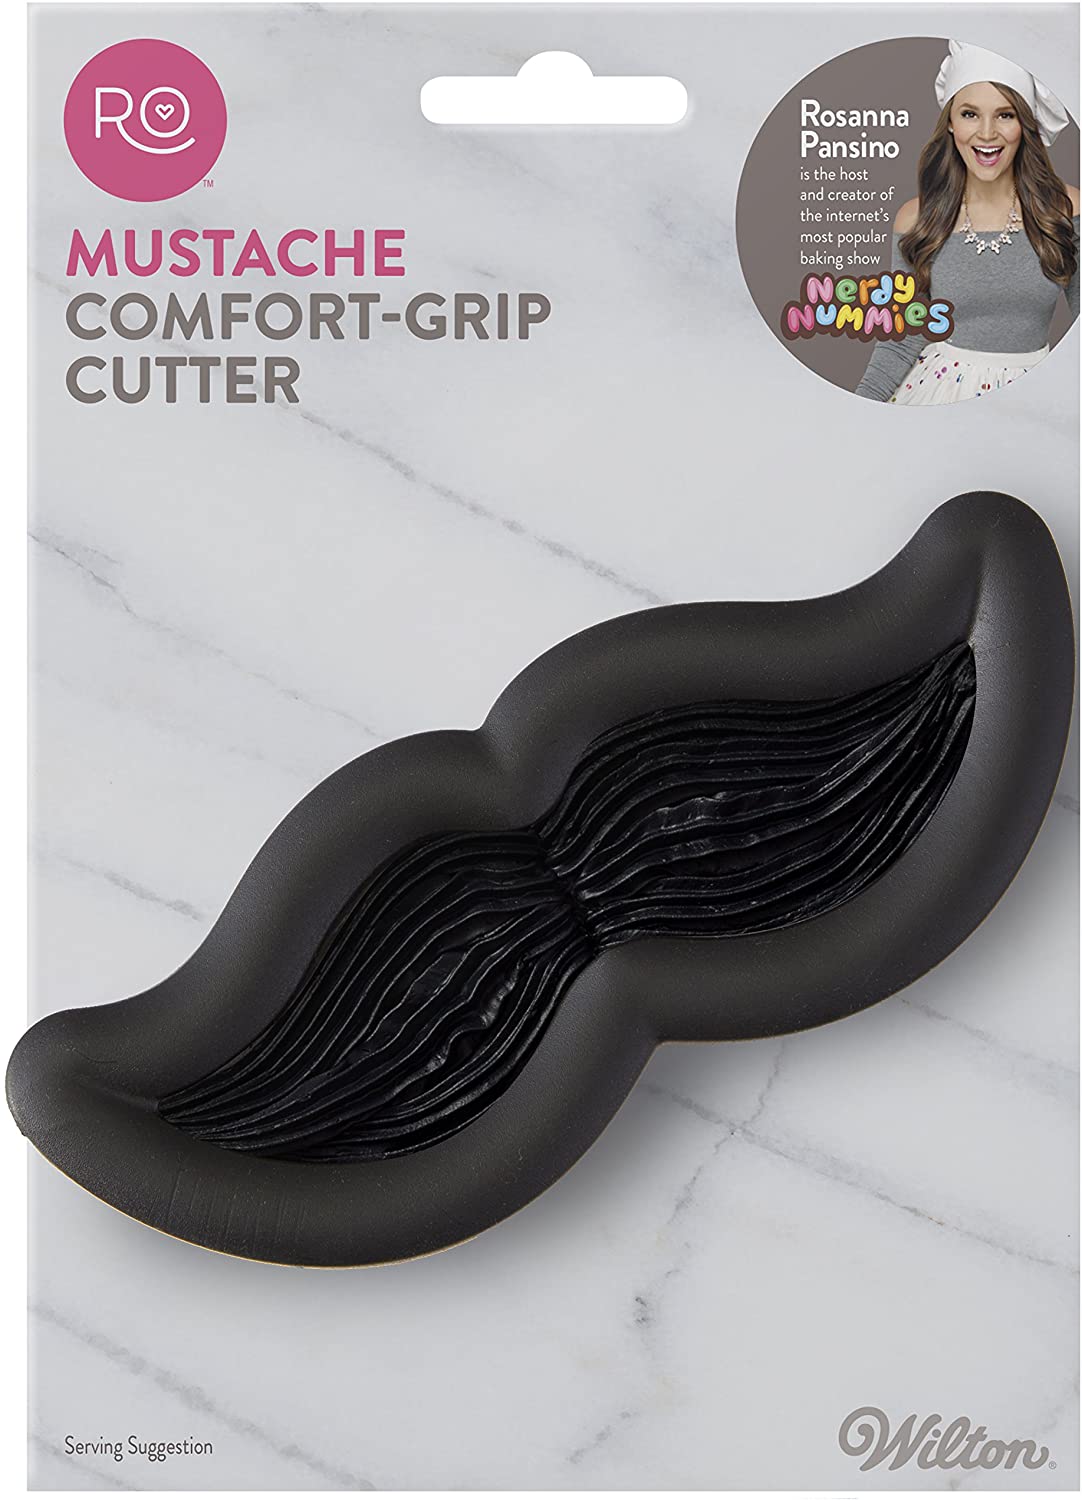 Wilton Rosanna Pansino Moustache Cutter with Comfort Grip, Stainless Steel, Black, 3.58 x 12.34 x 17.39 cm